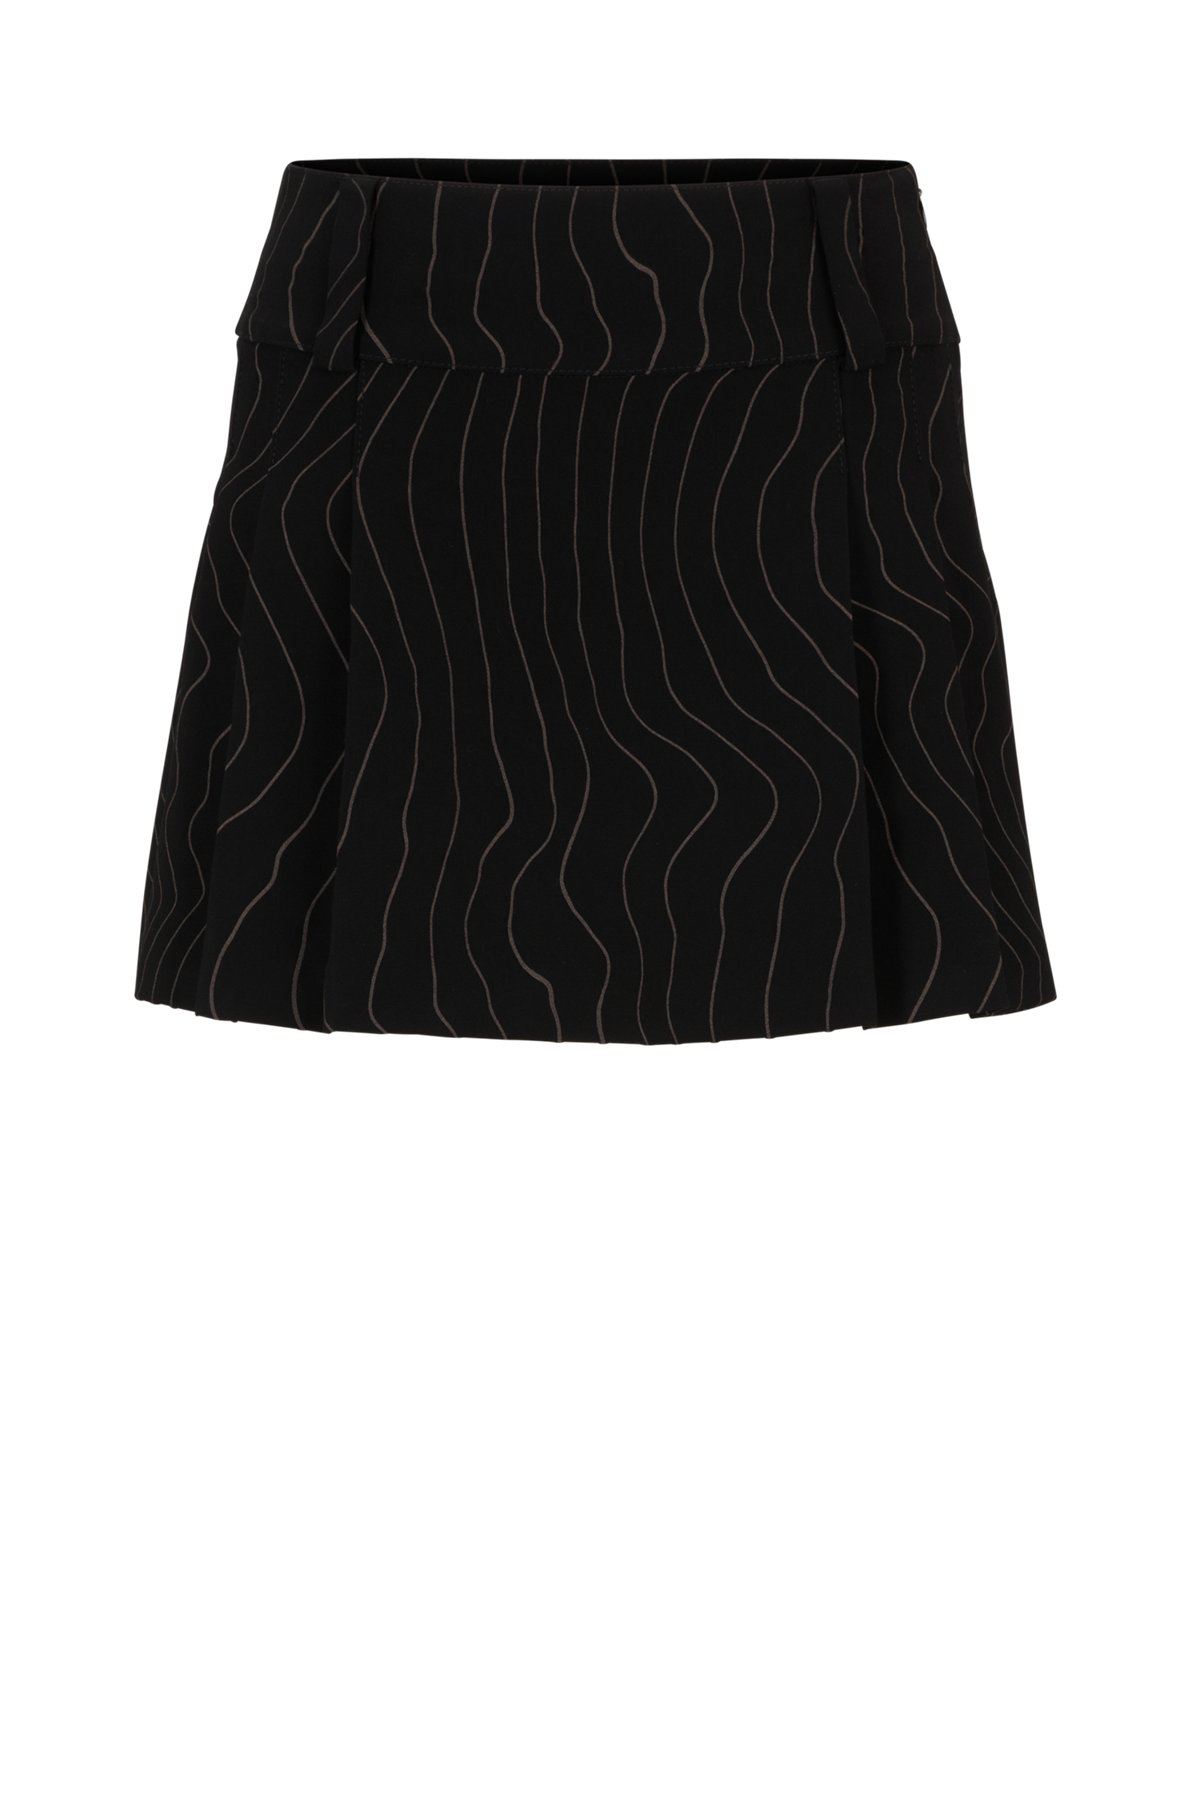 HUGO x Bella Poarch pinstripe mini skirt, Black Patterned